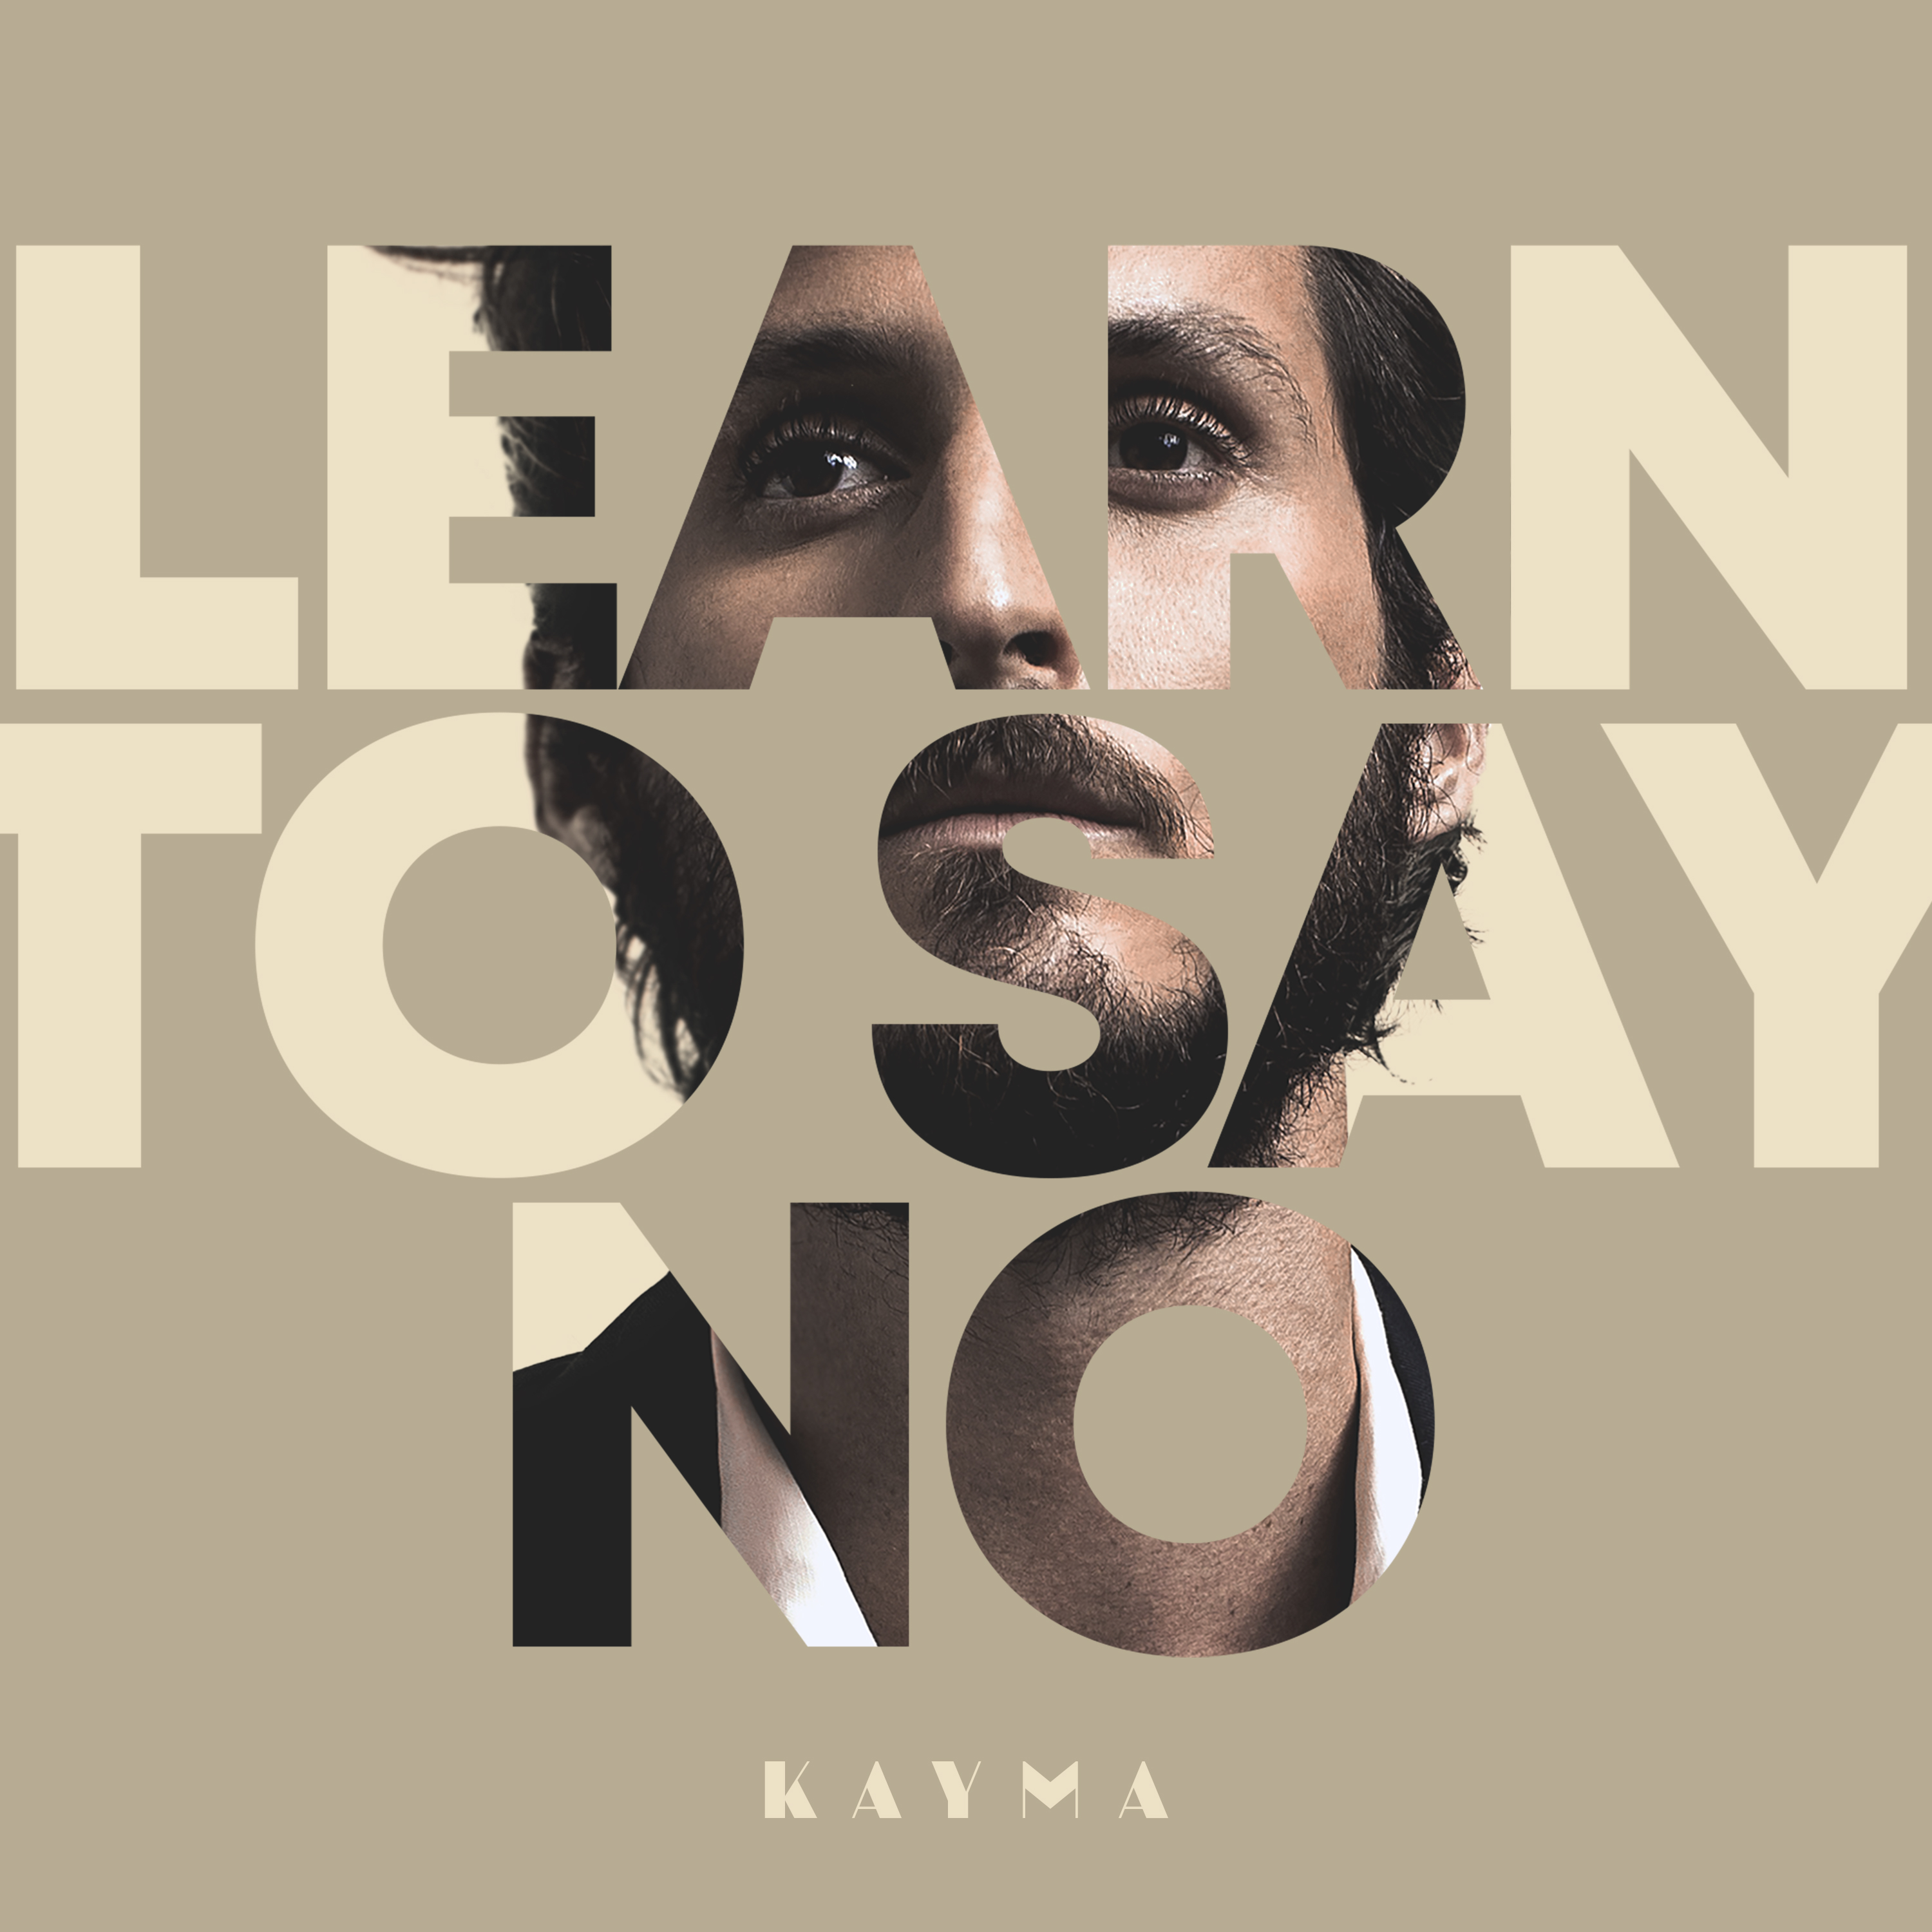 Kayma e il nuovo singolo “Learn To Say No”